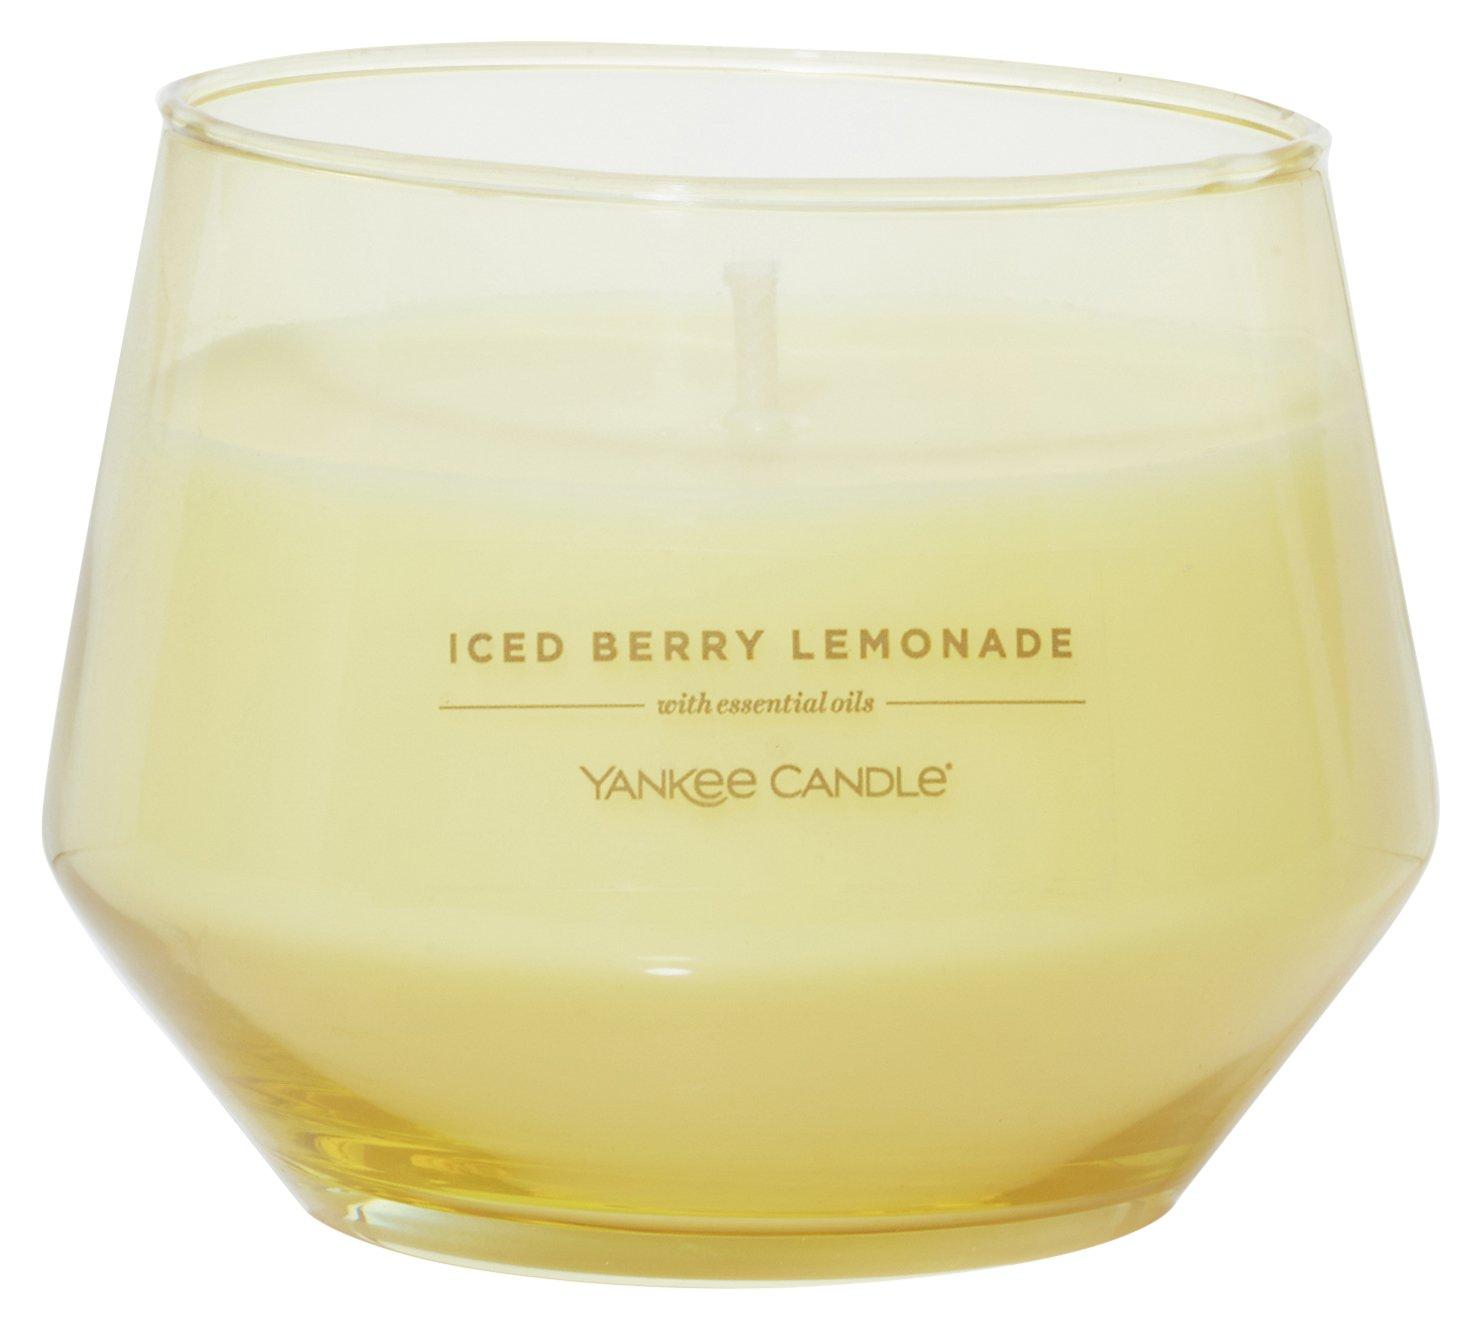 10oz Iced Berry Lemonade Candle